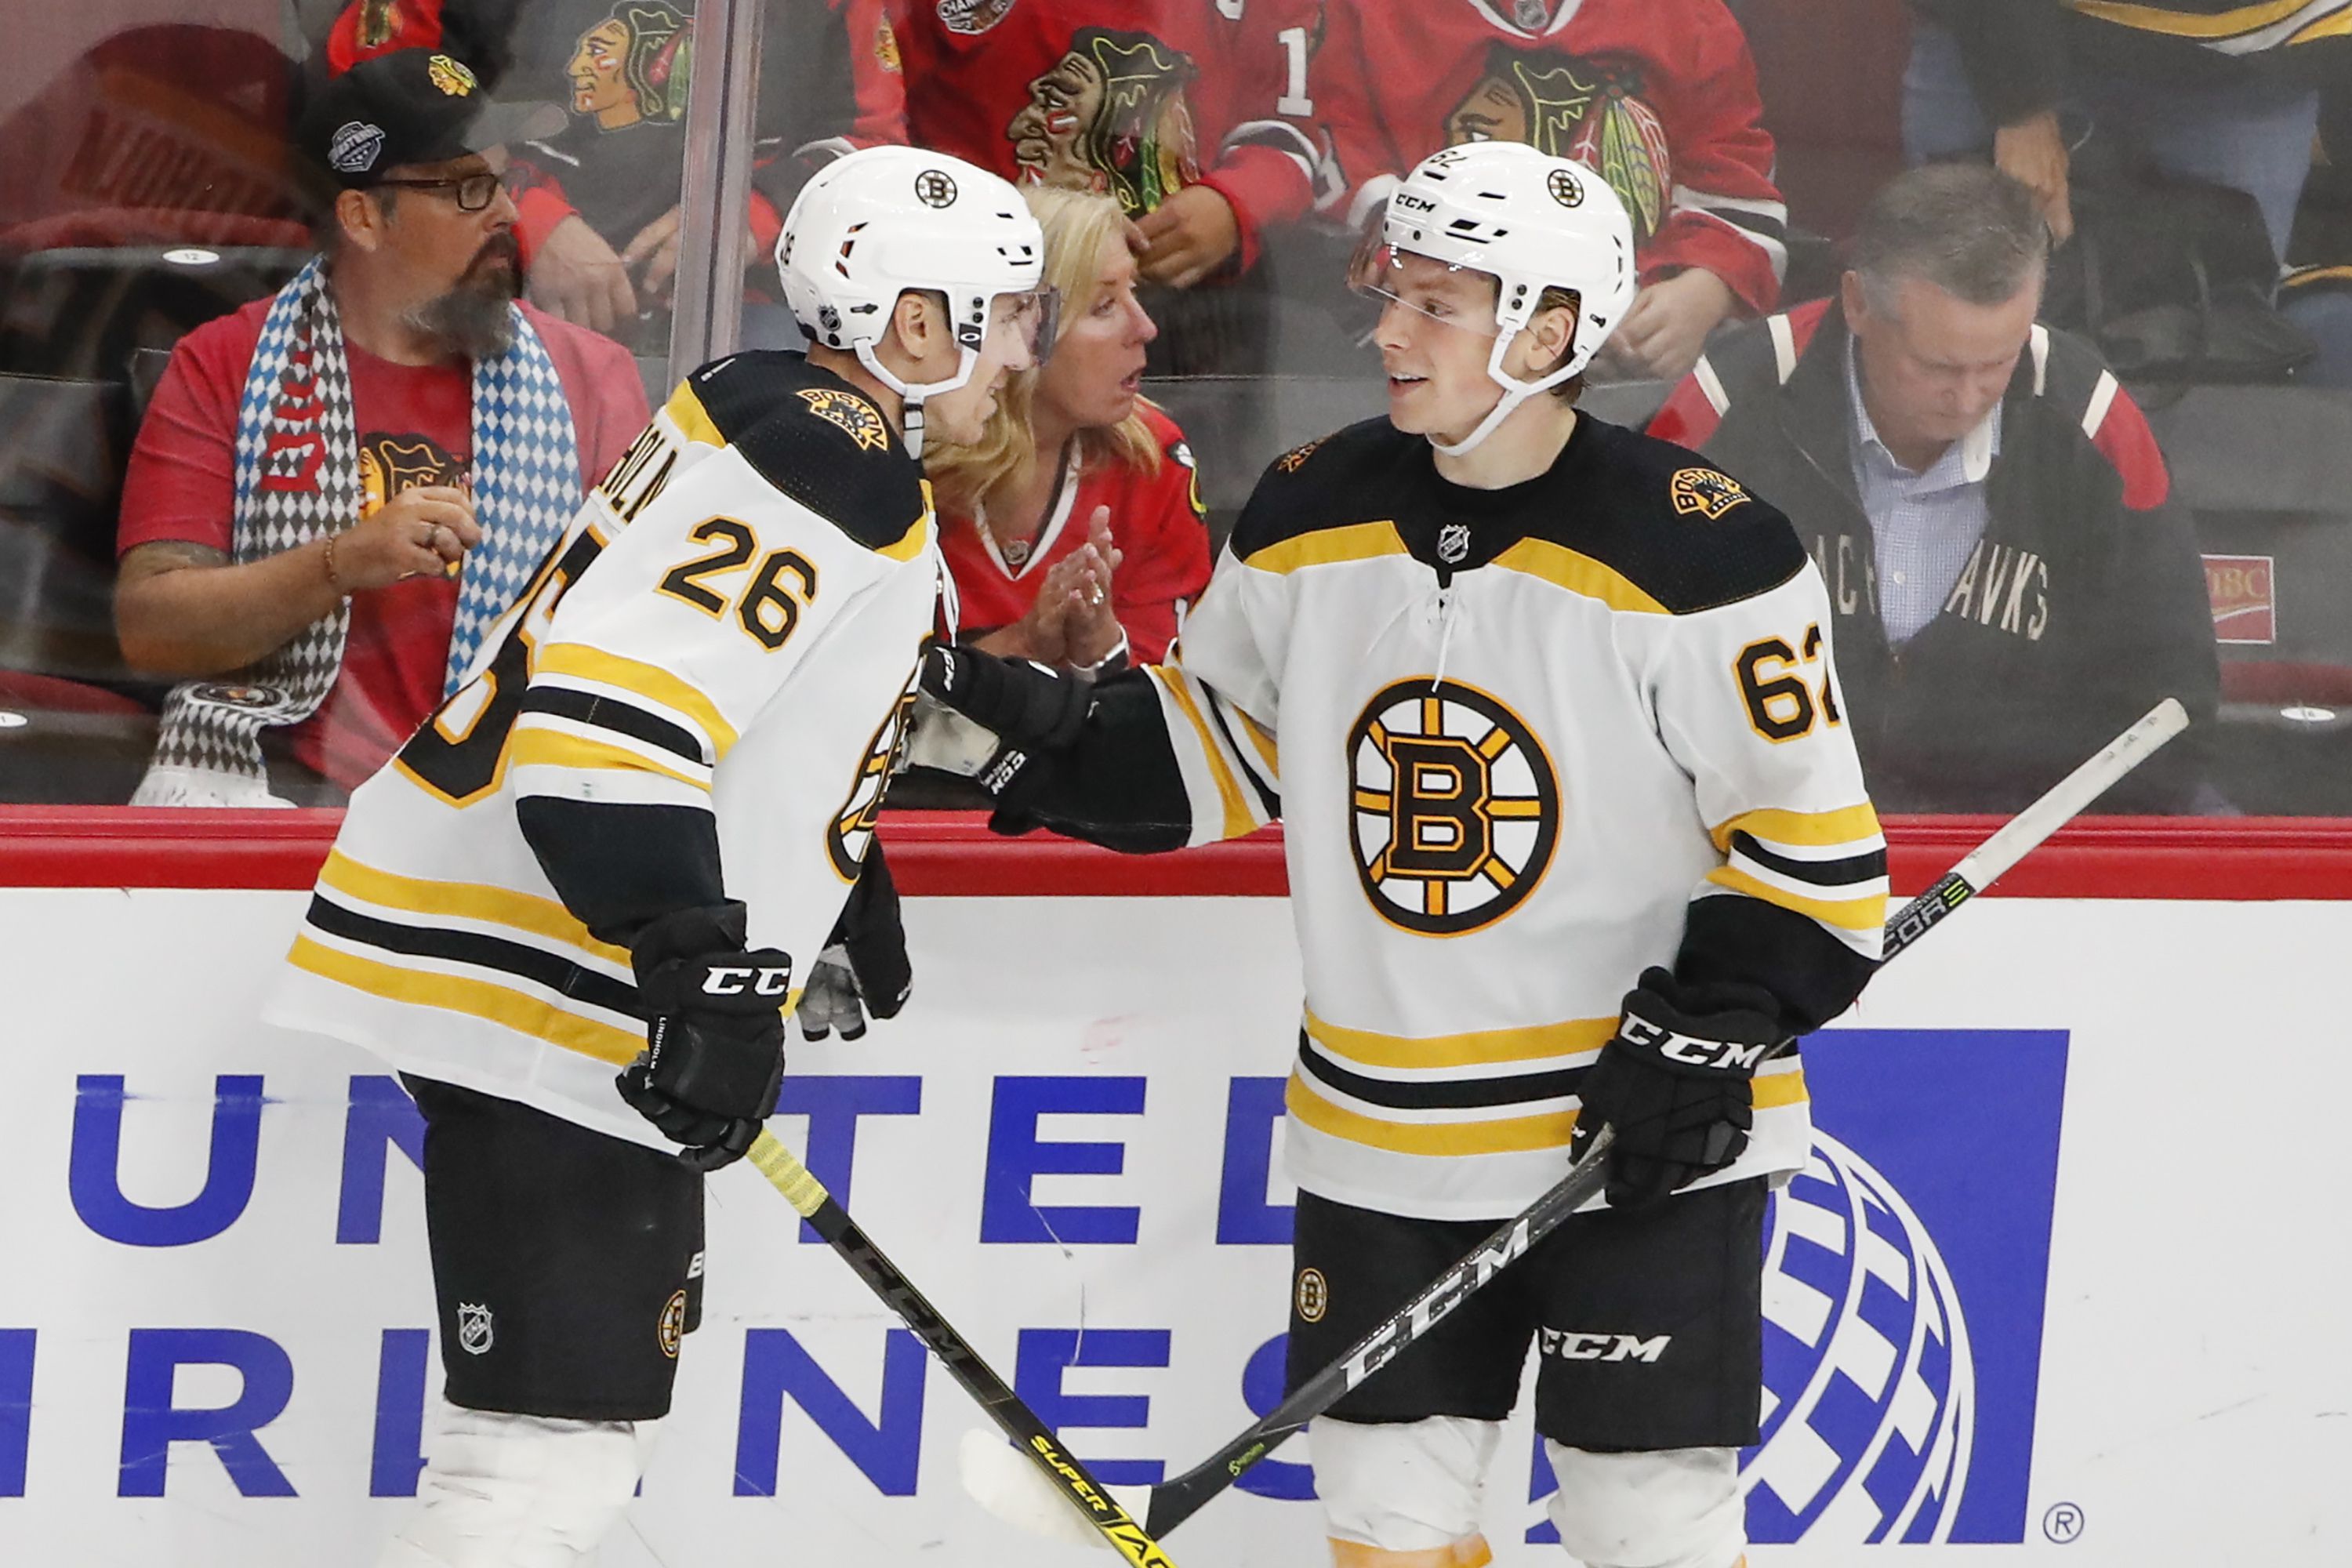 Matt Grzelcyk's success with Bruins inevitable